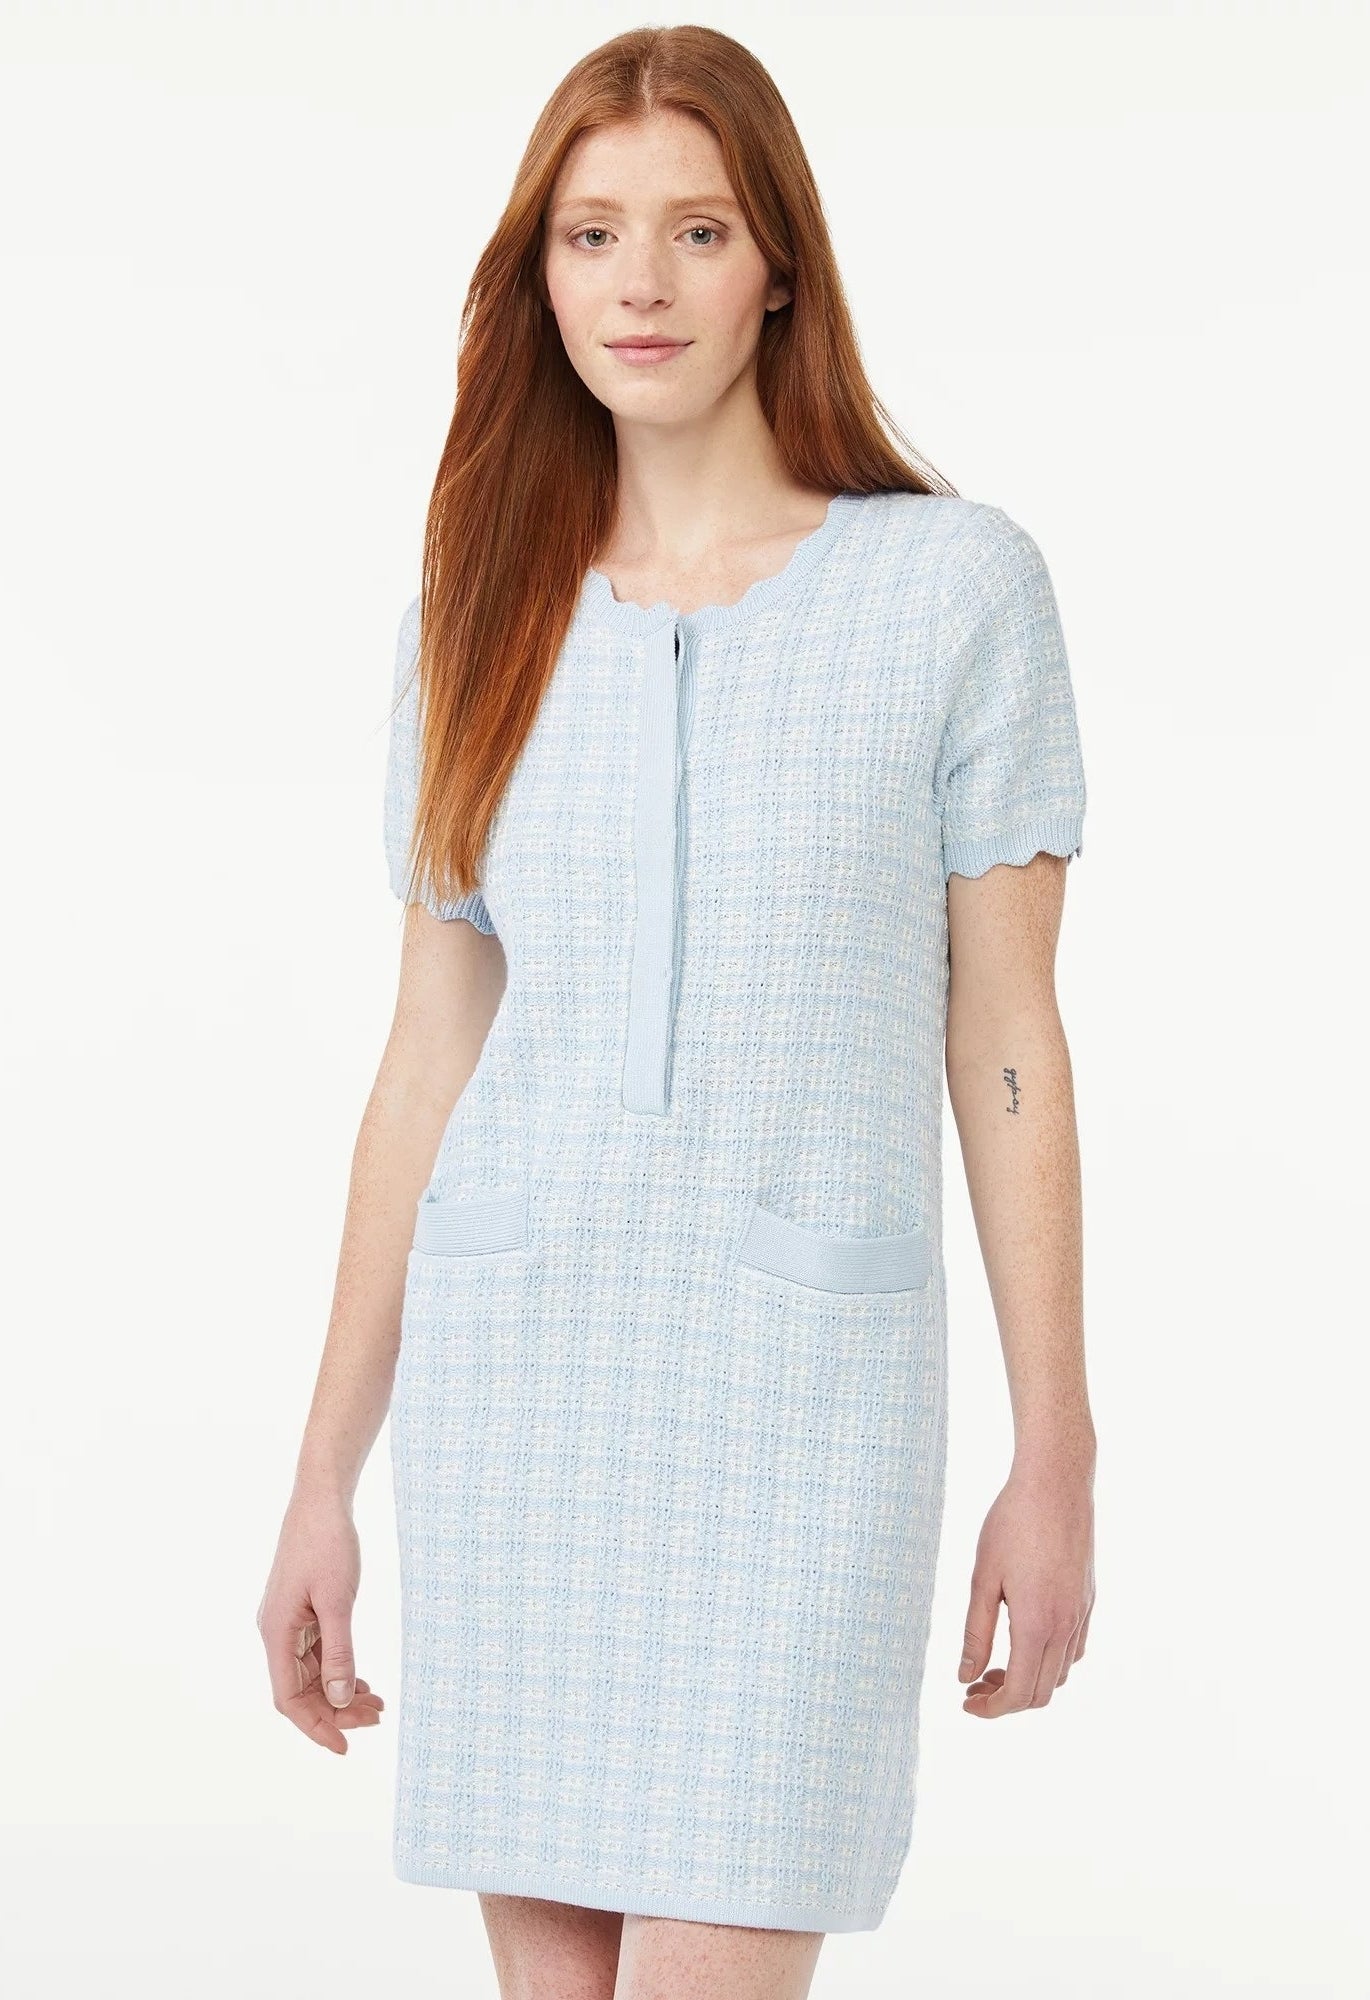 Model wearing short sleeve tweed mini dress in blue and white pattern